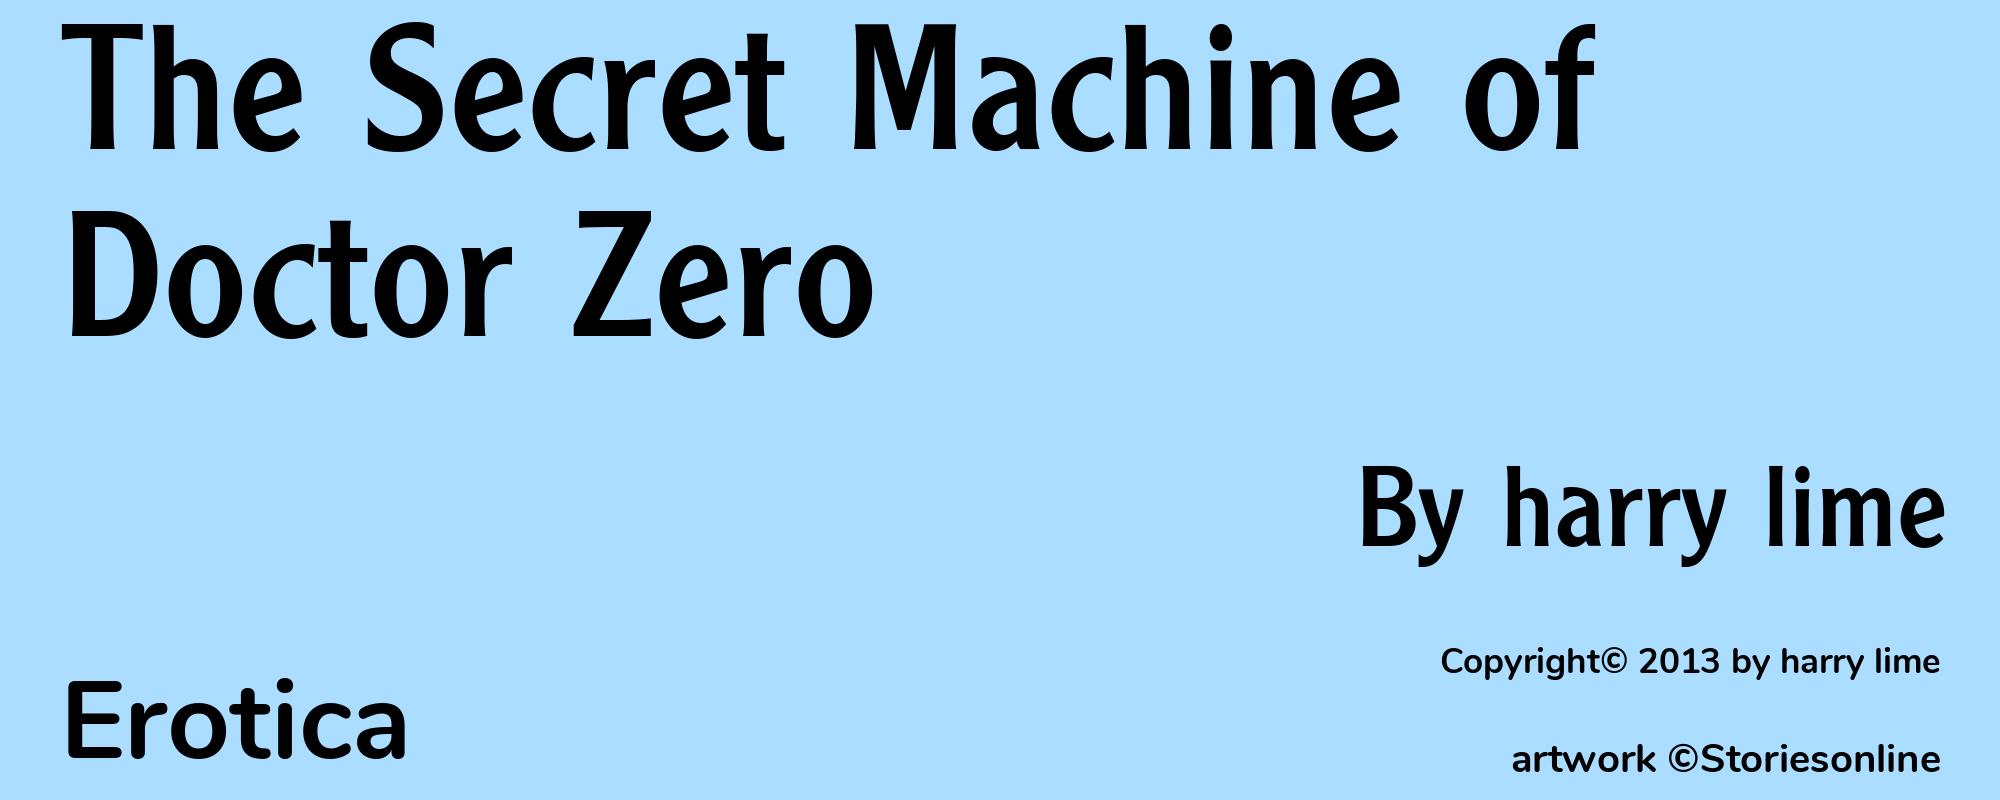 The Secret Machine of Doctor Zero - Cover